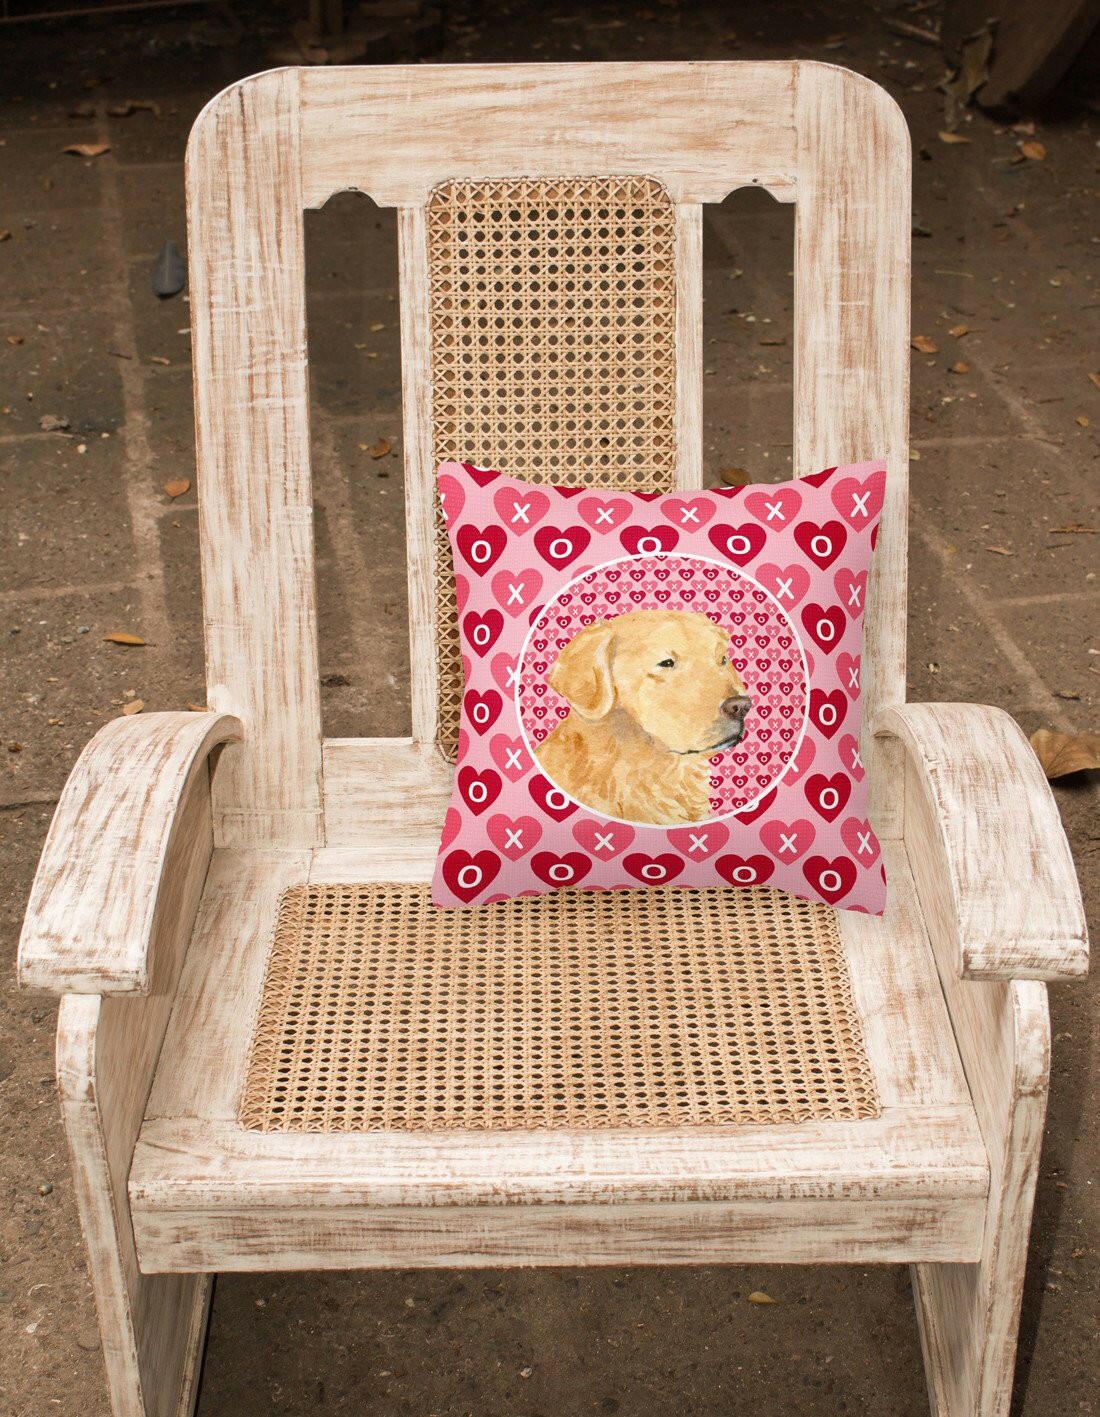 Golden Retriever Hearts Love Valentine's Day Fabric Decorative Pillow SS4476PW1414 by Caroline's Treasures